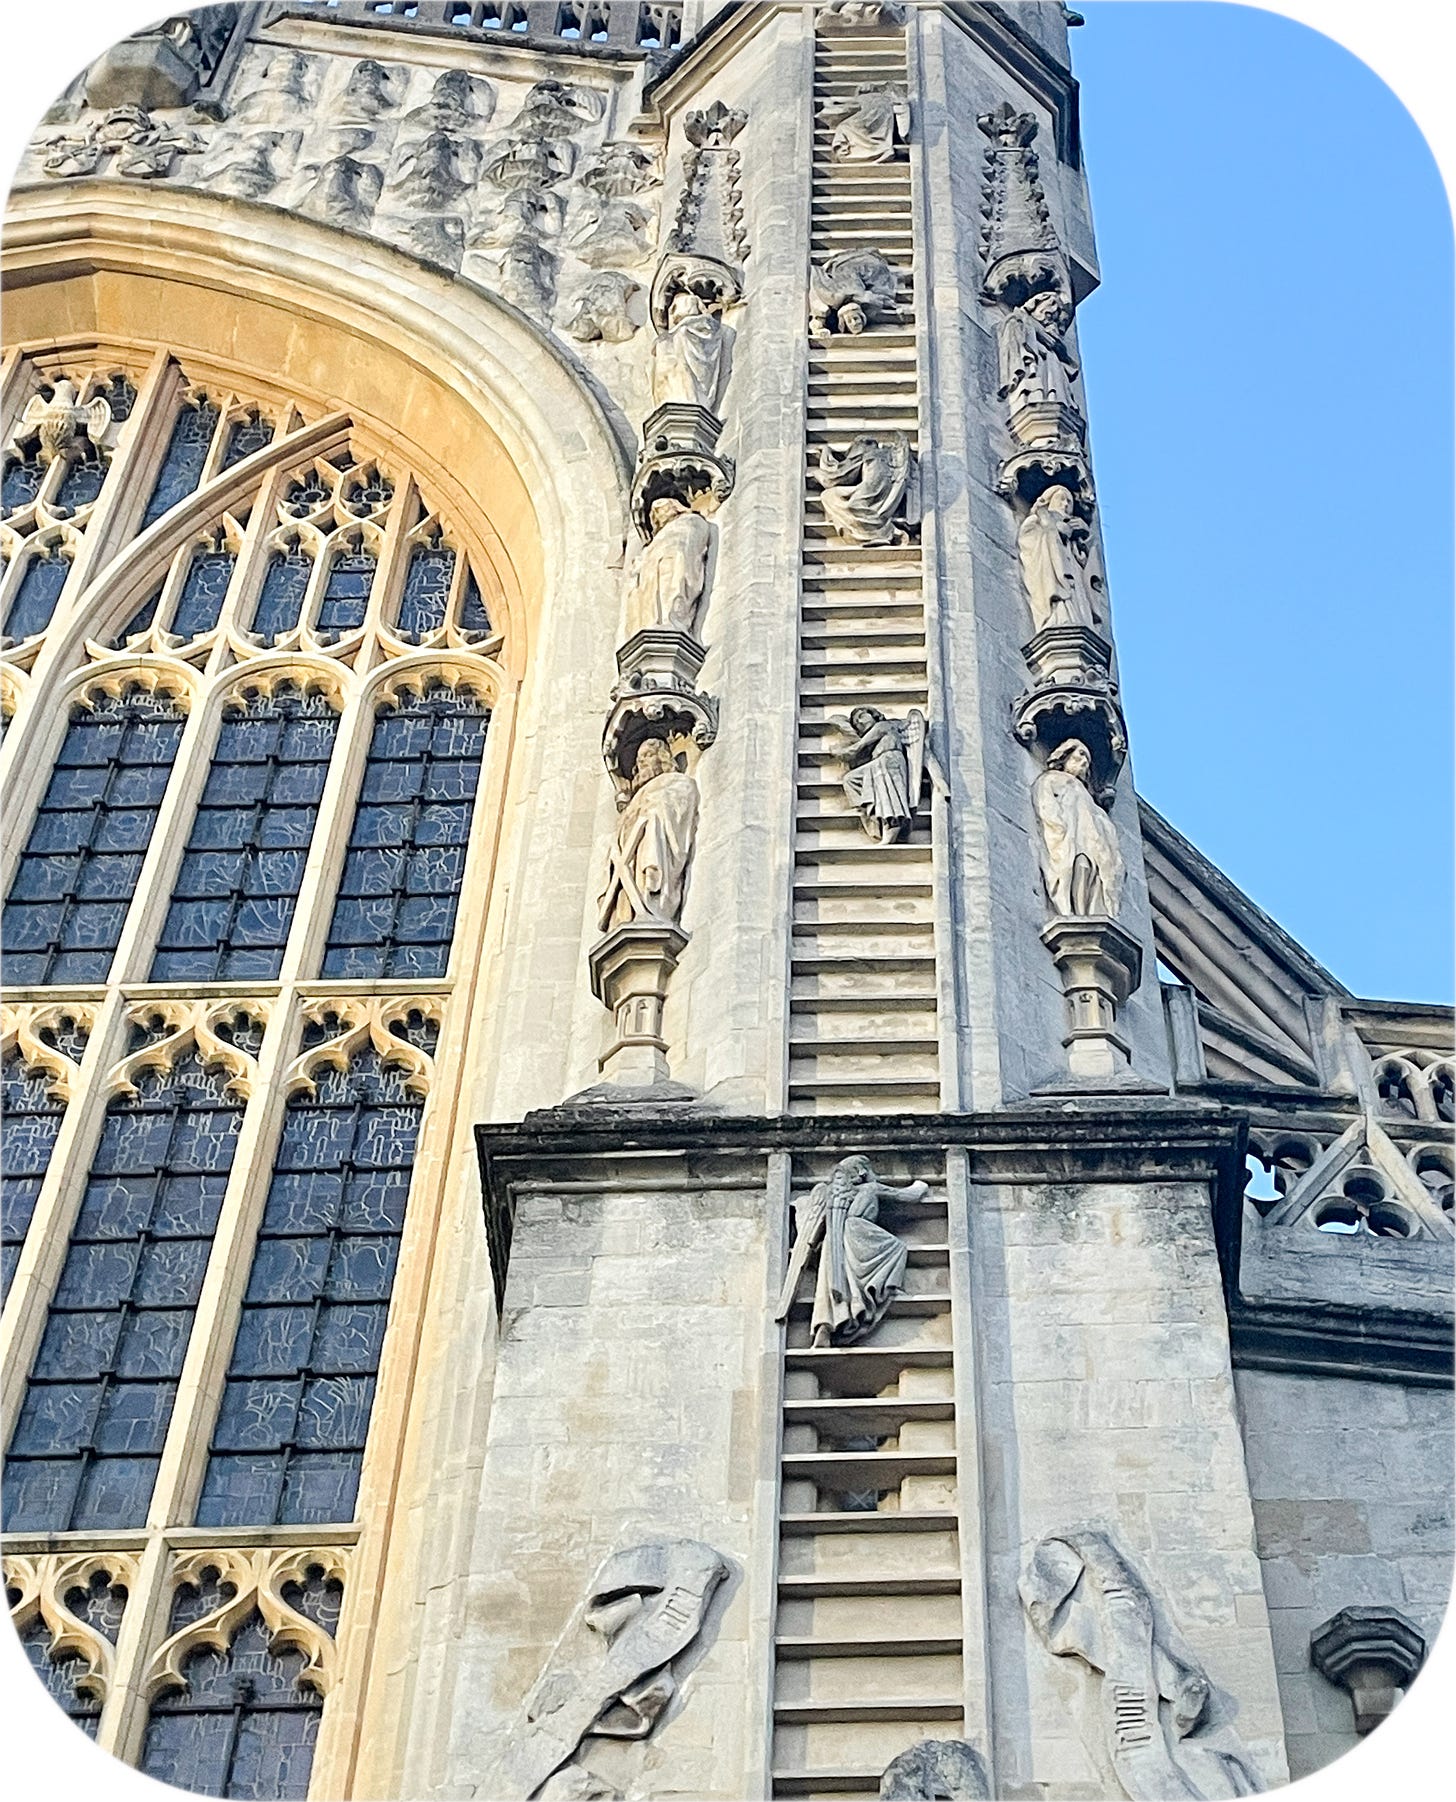 Jacob's Ladder, Bath Abbey